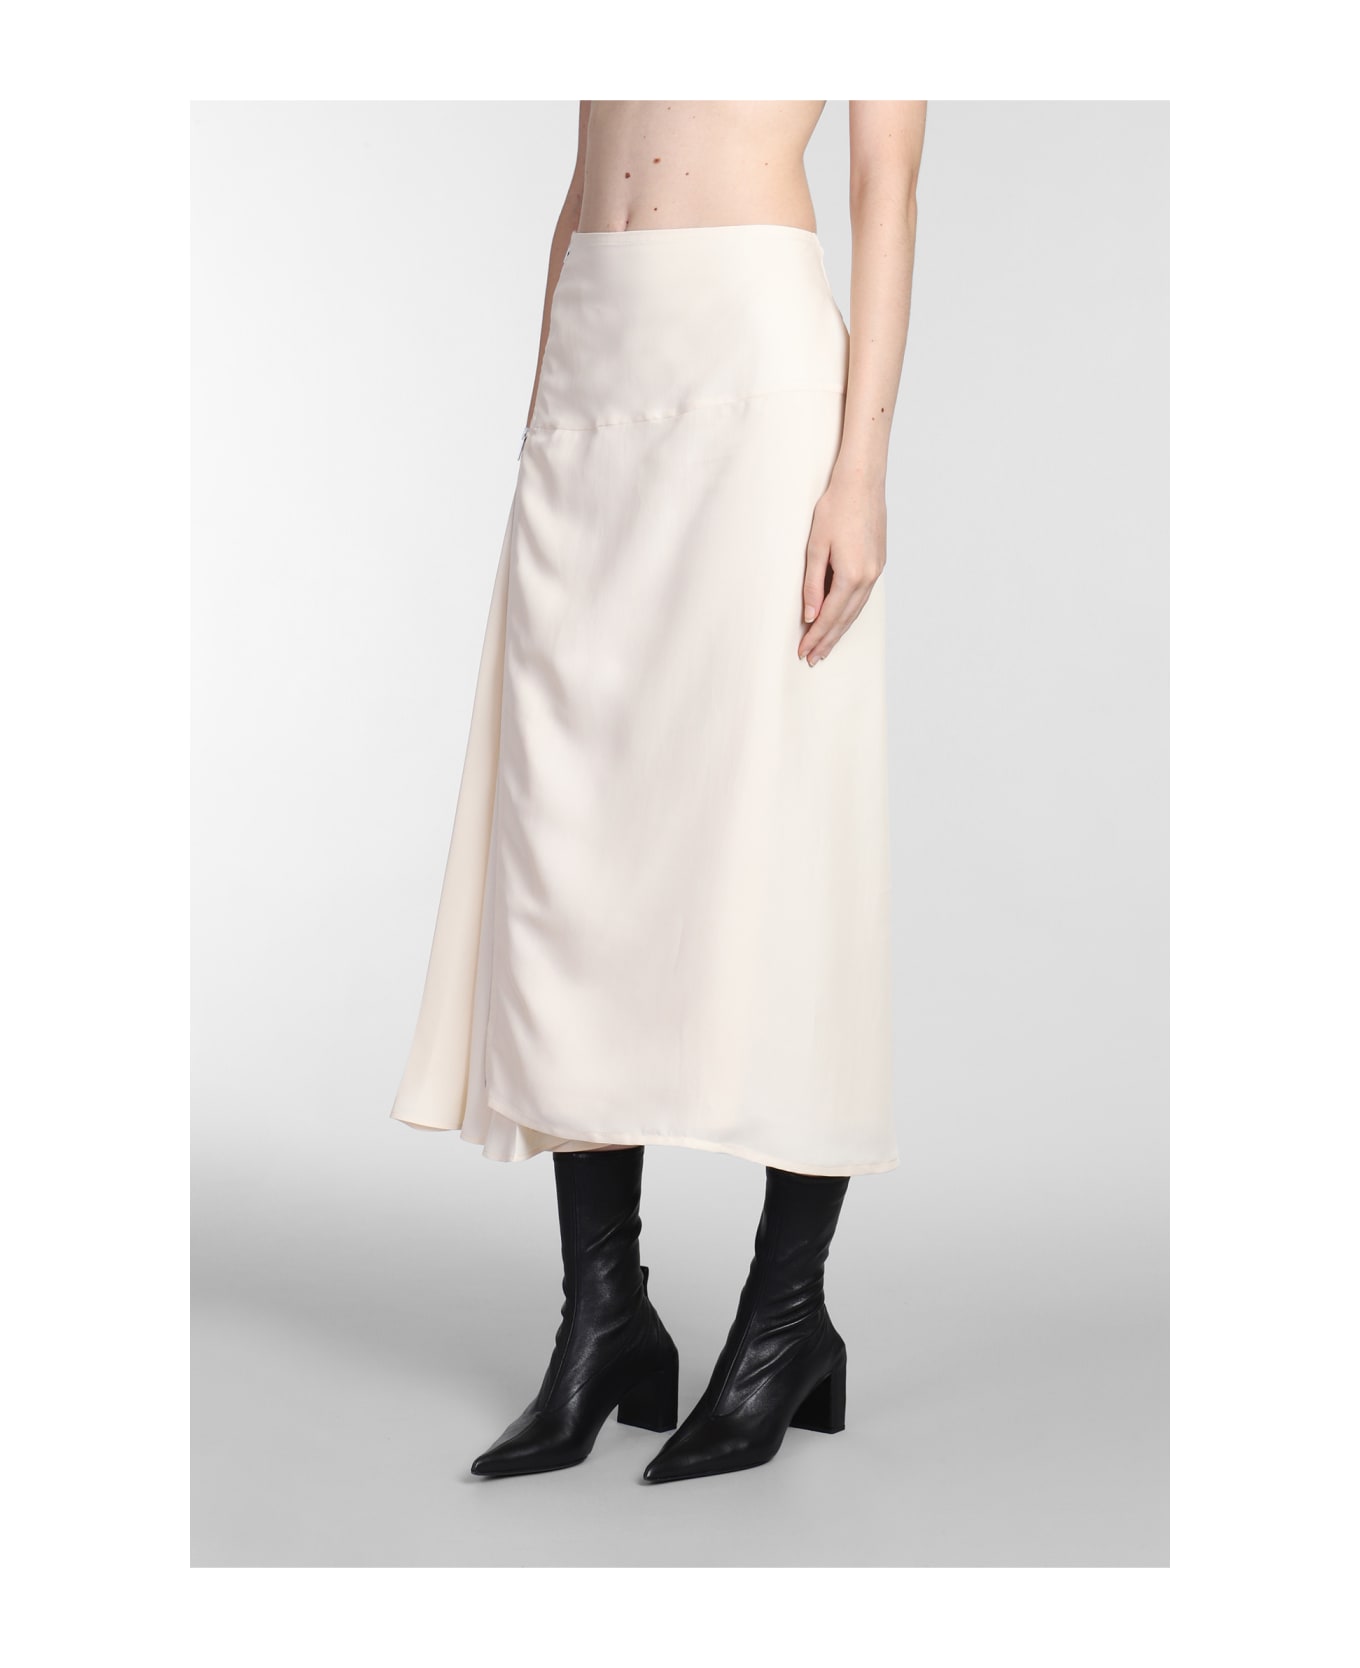 Jil Sander Skirt In Beige Wool - White candle